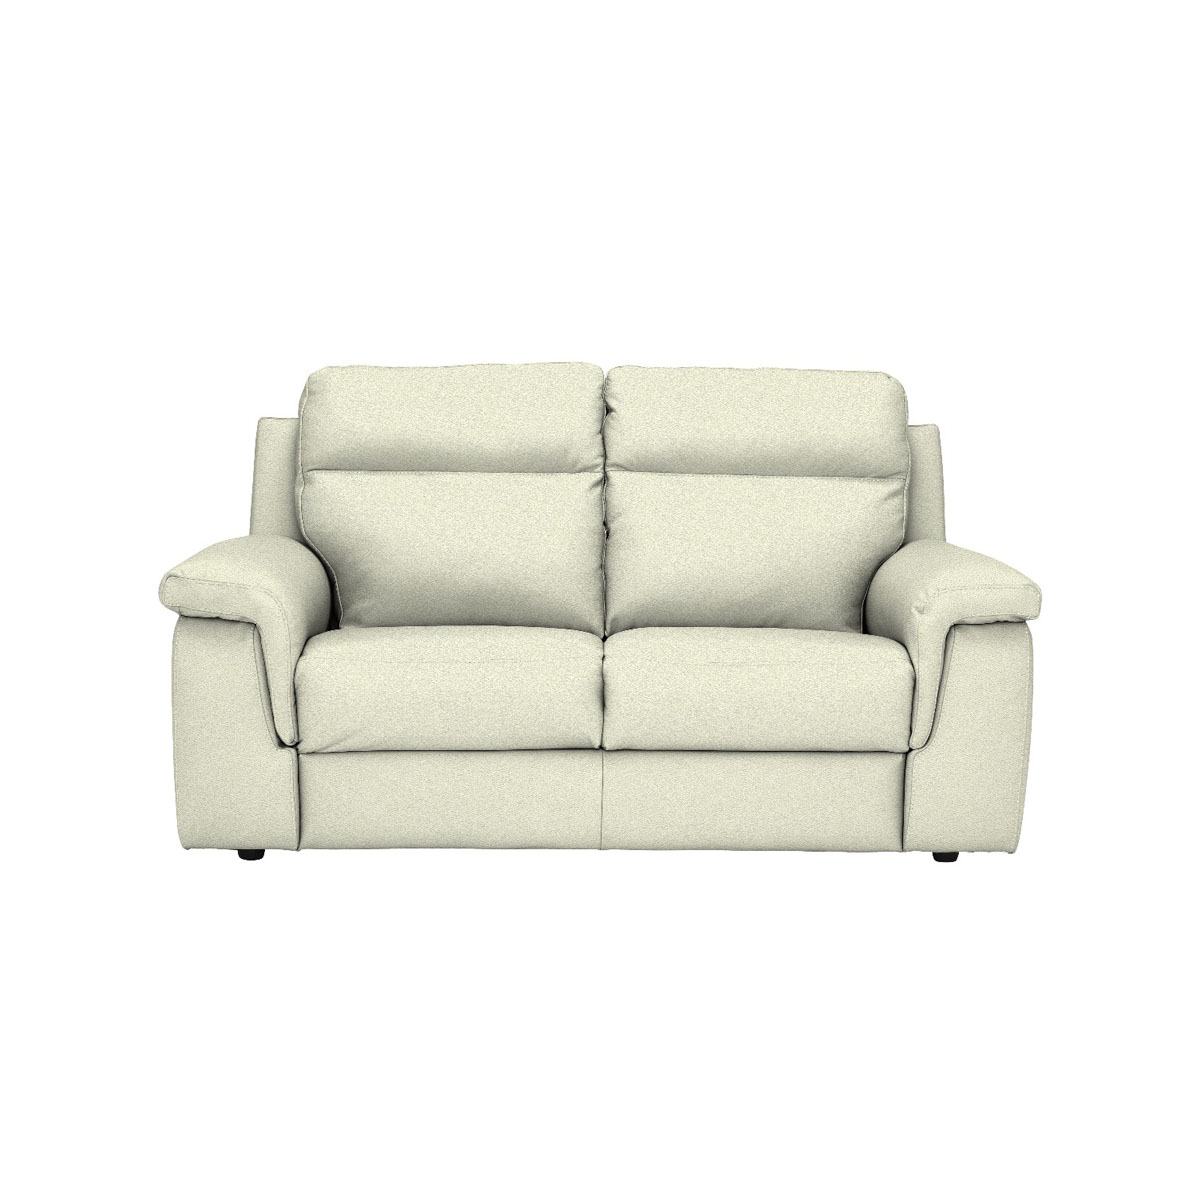 Fulton 2 Seater Sofa, White | Barker & Stonehouse